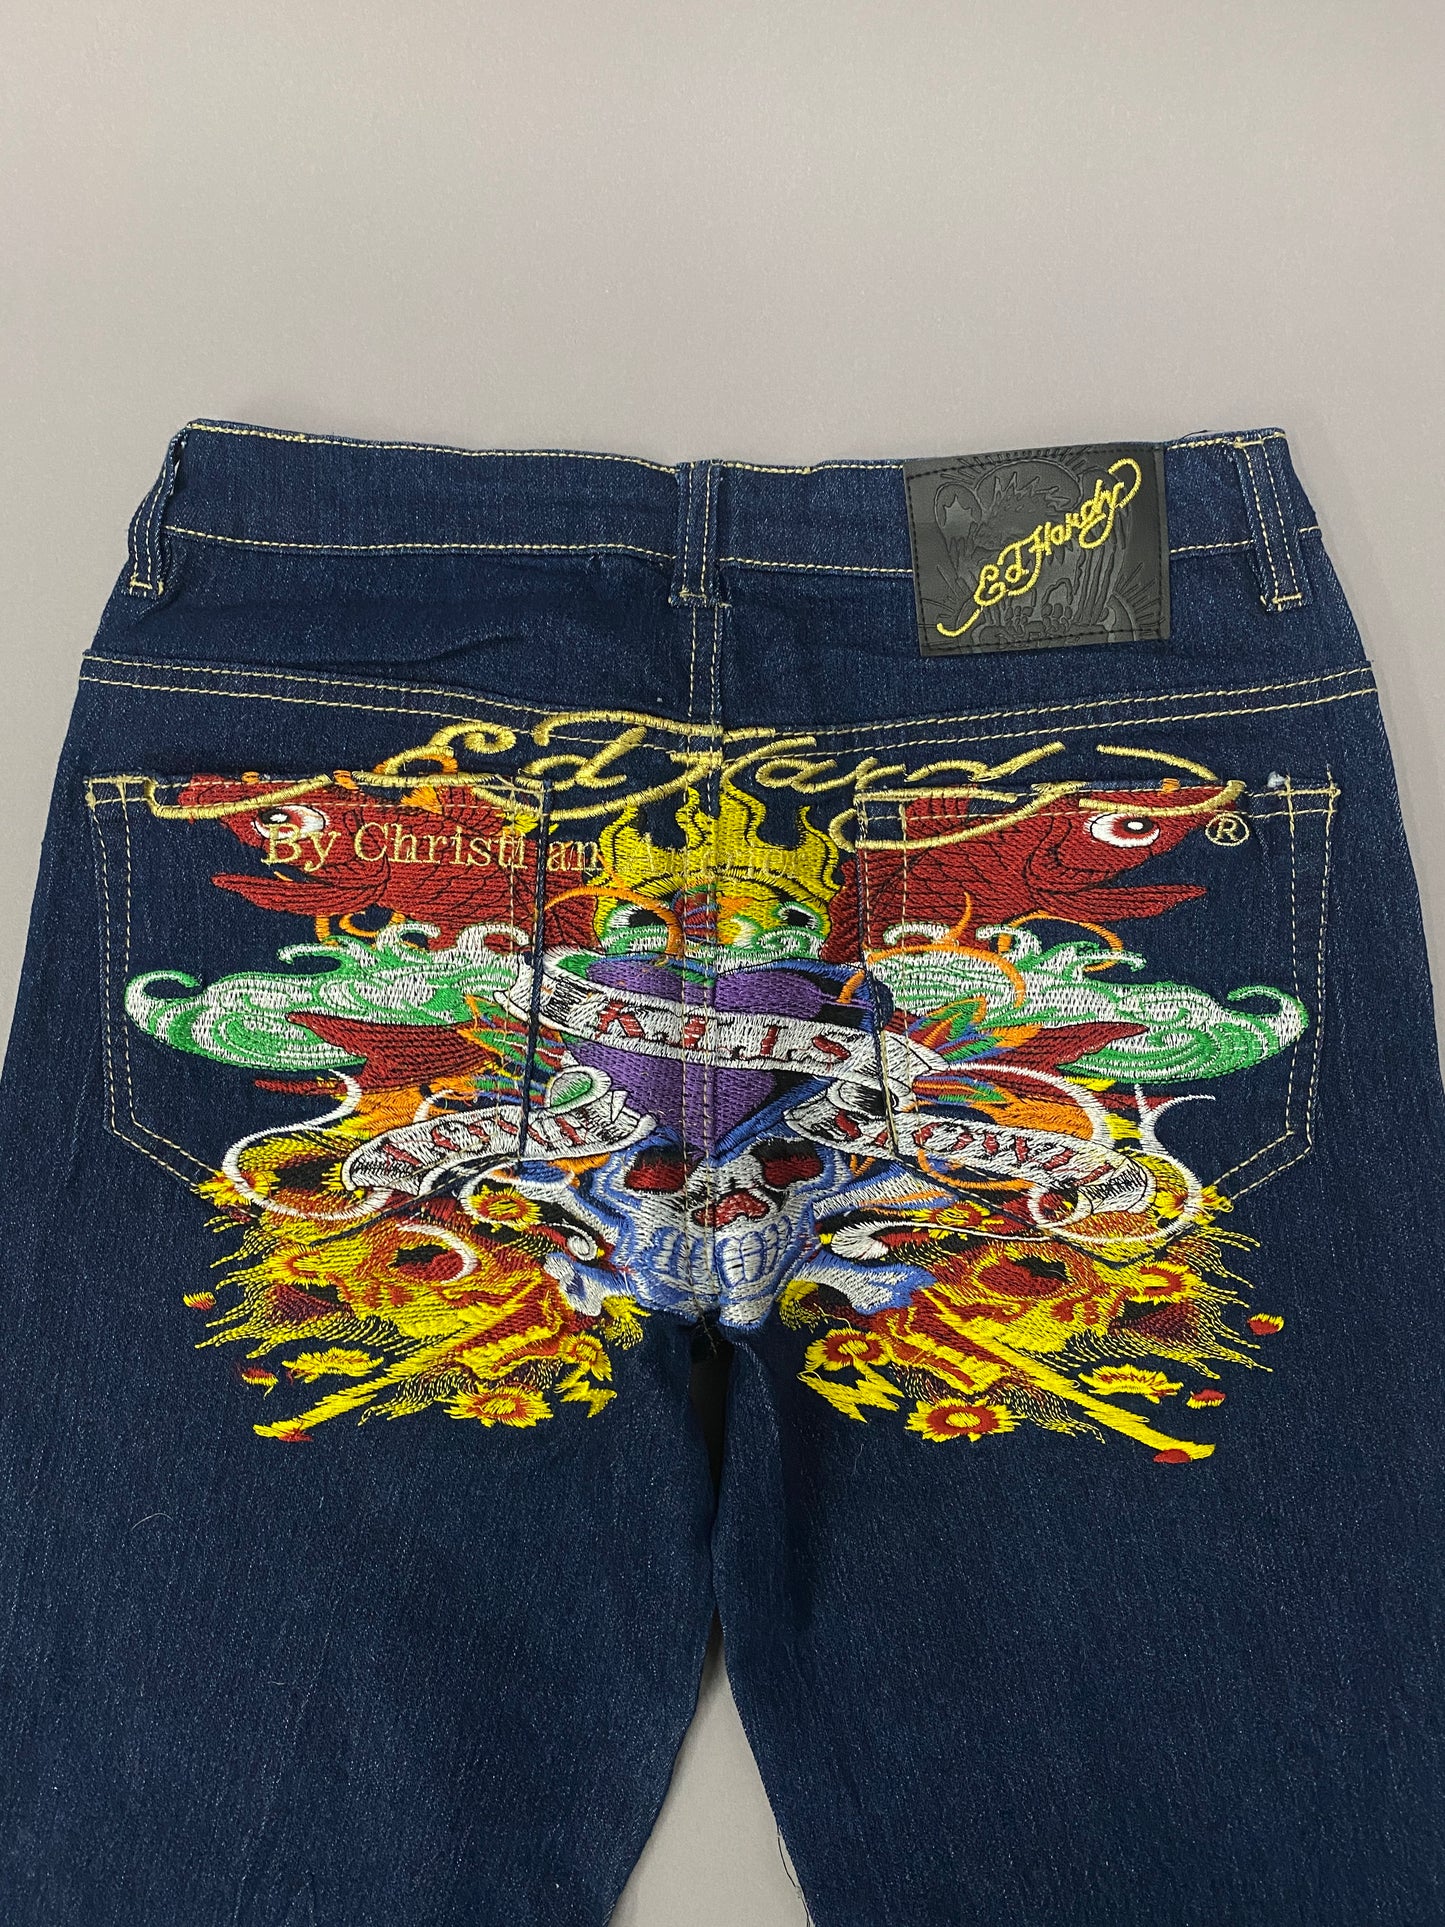 Ed Hardy Jeans by Christian Audigier - 27